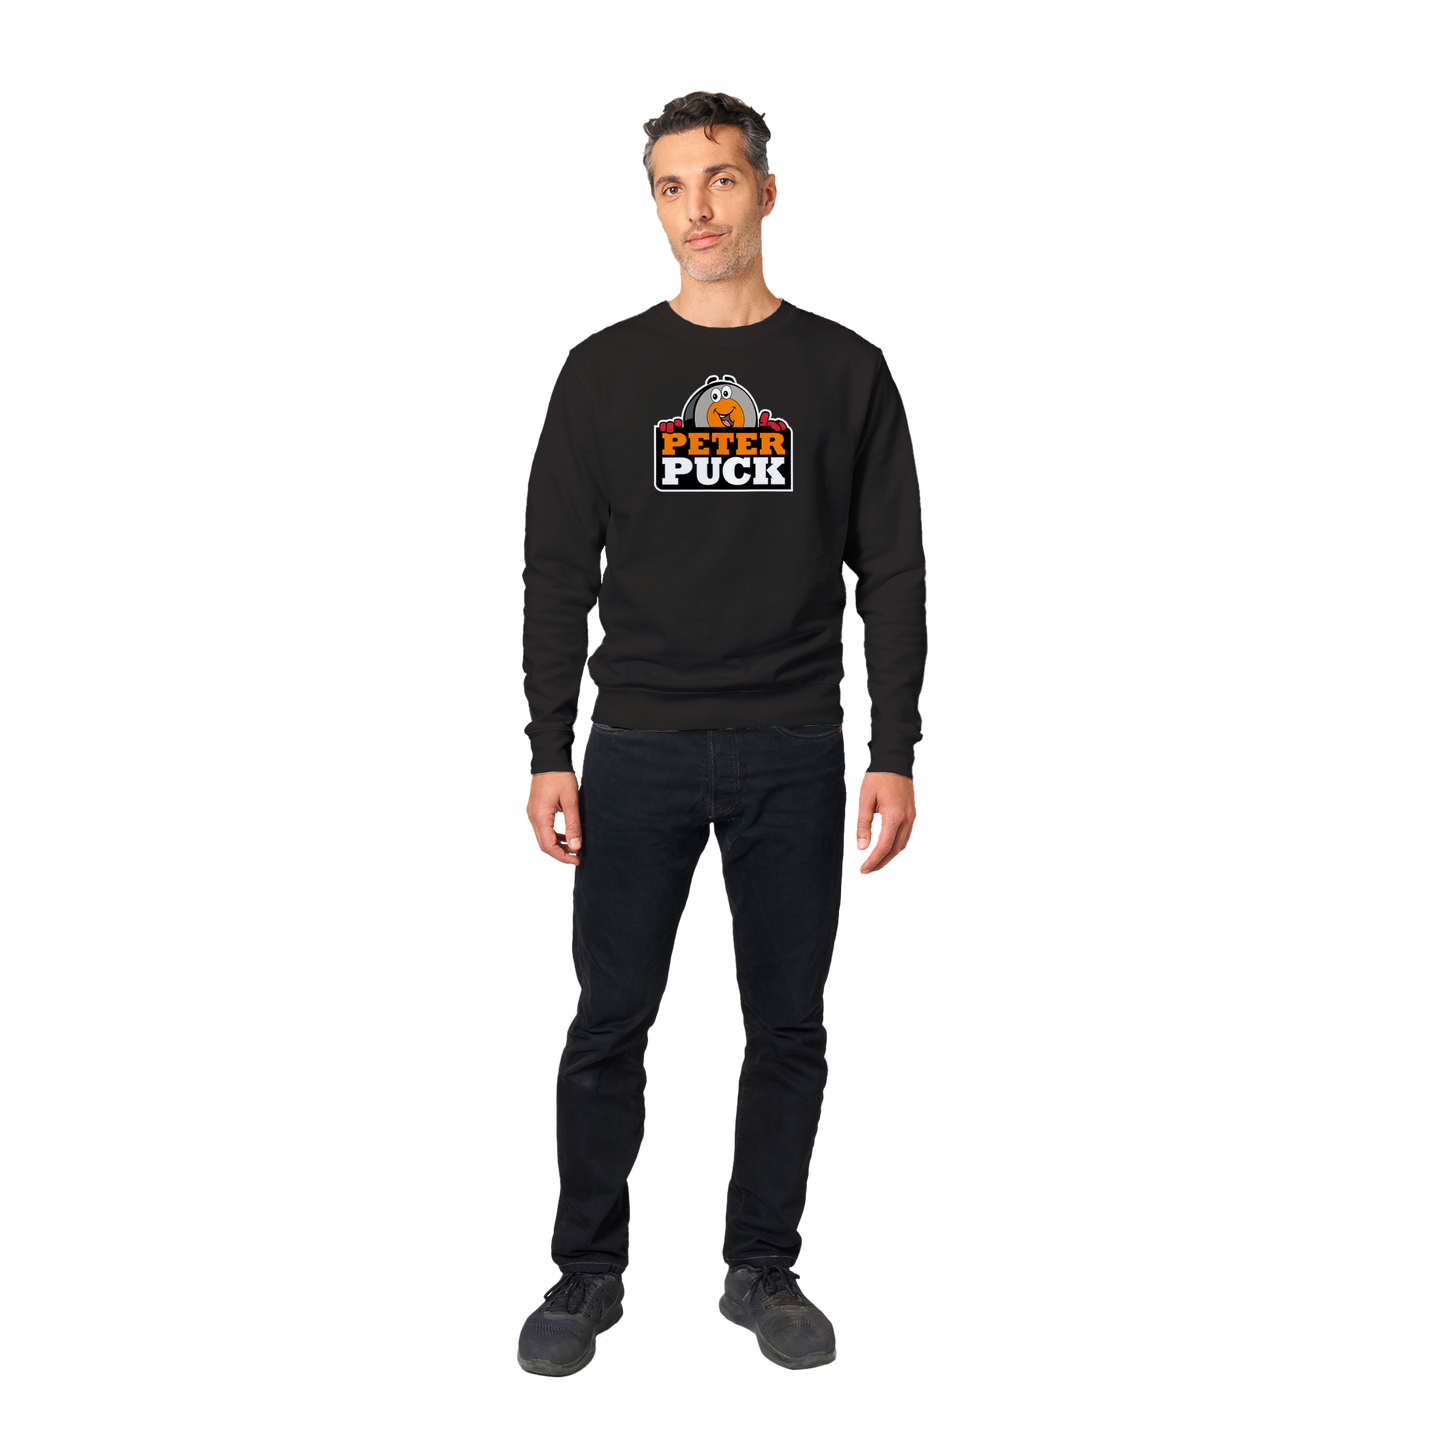 Peter Puck Peek Mens Premium Crewneck Sweatshirt